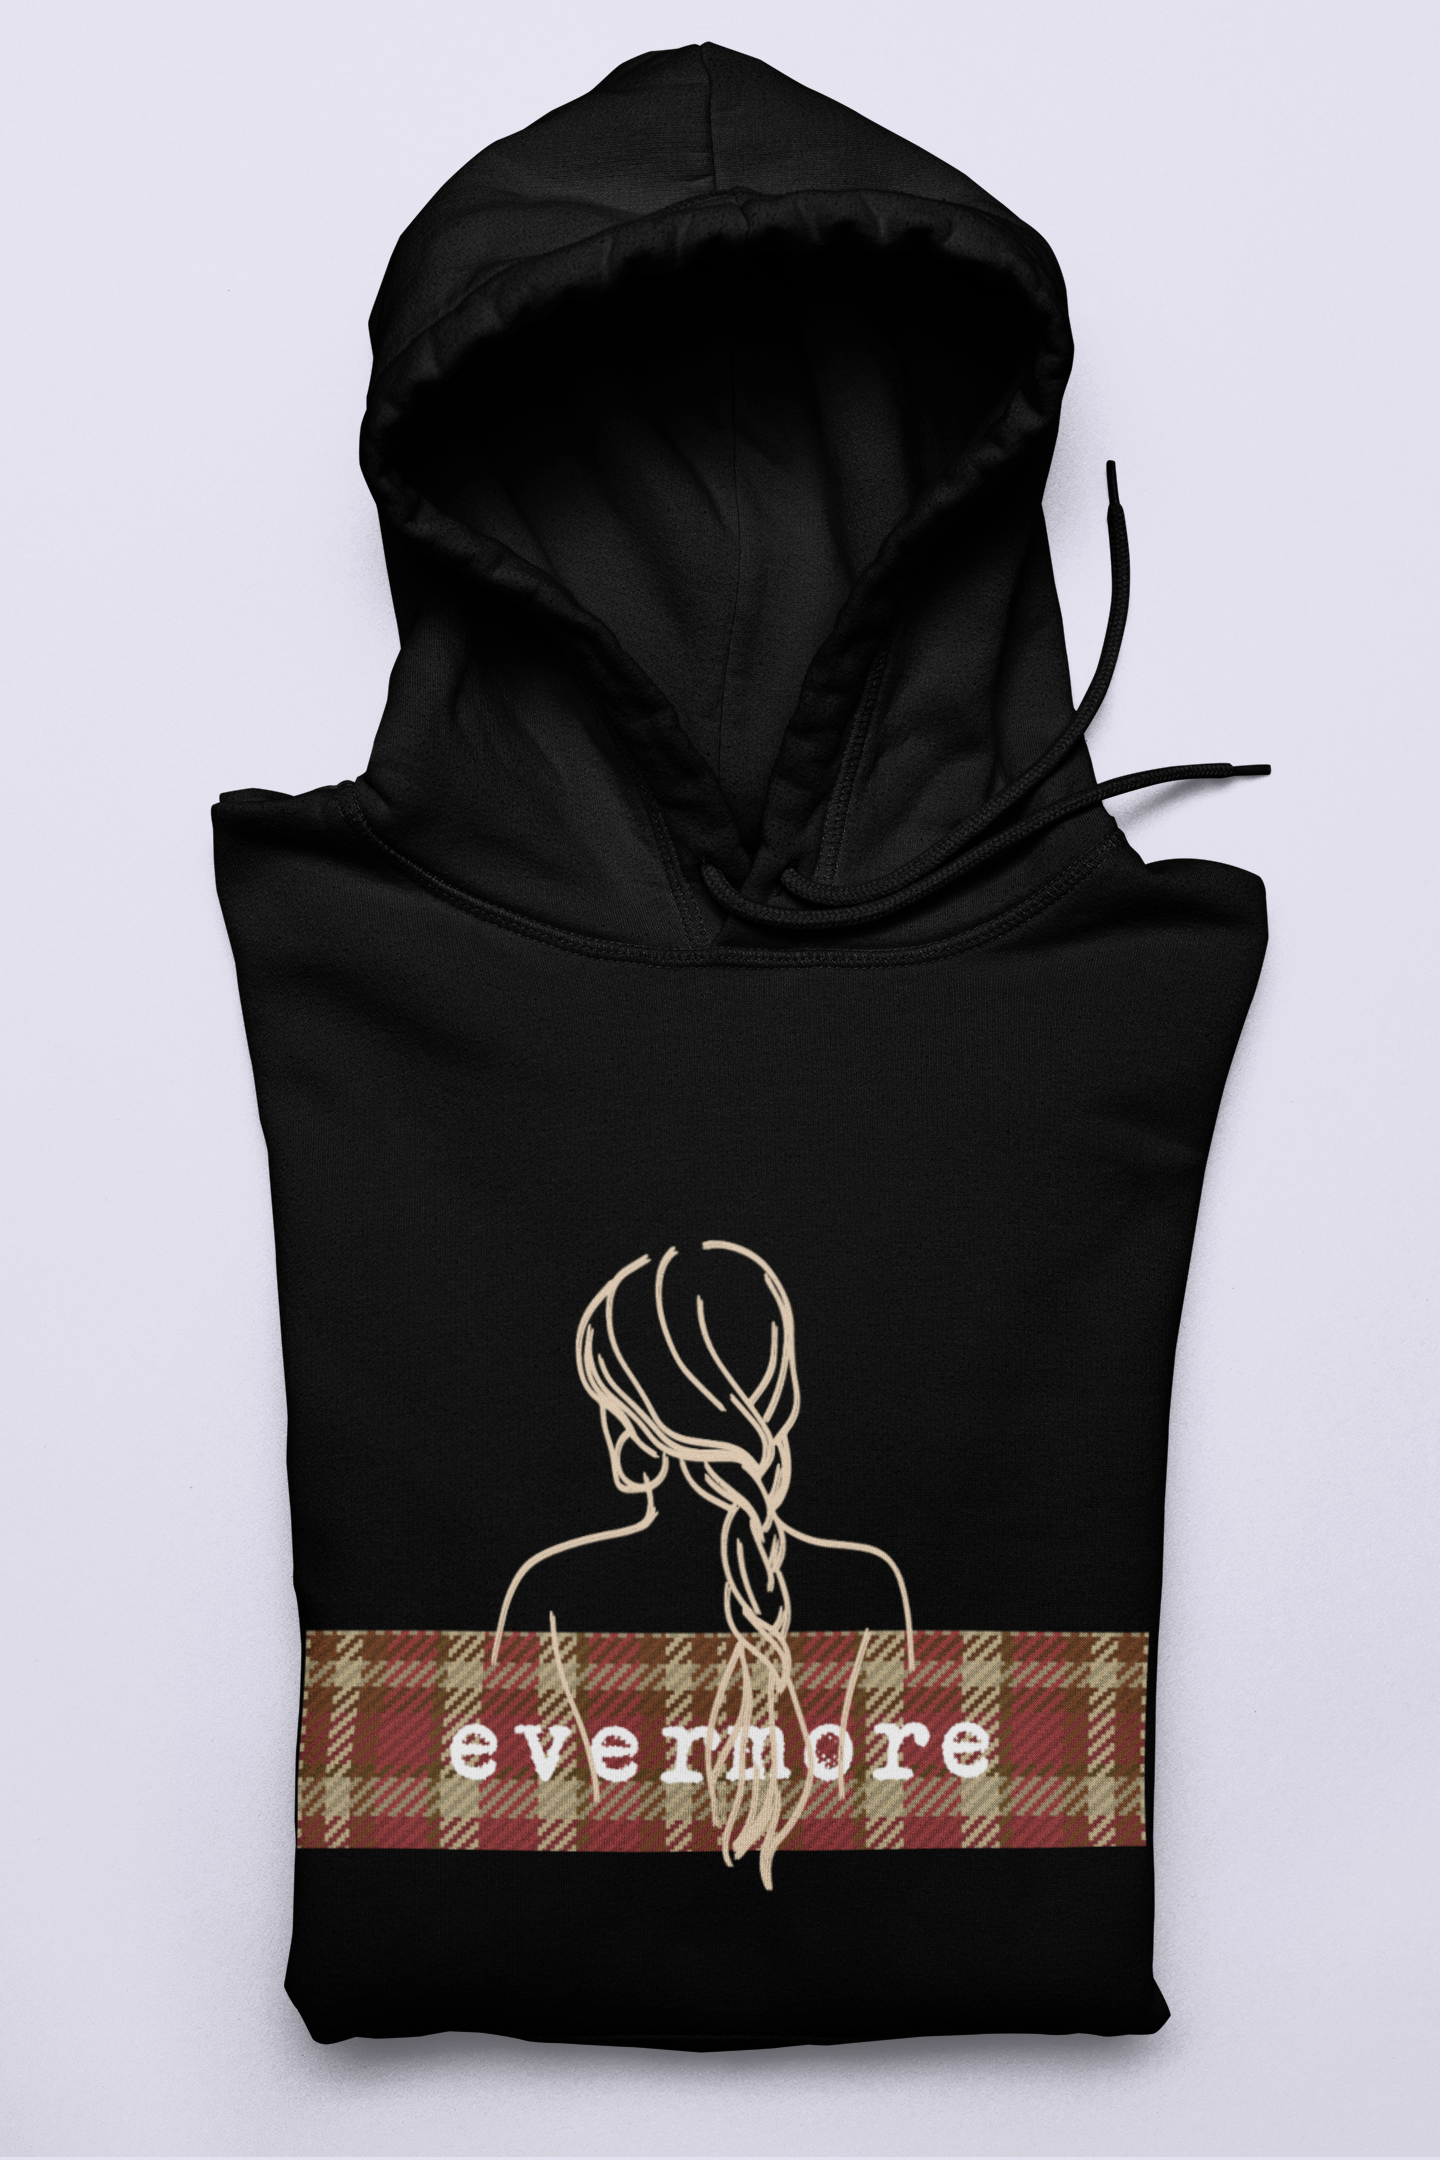 Evermore | Taylor Swift | Premium Unisex Winter Hoodie